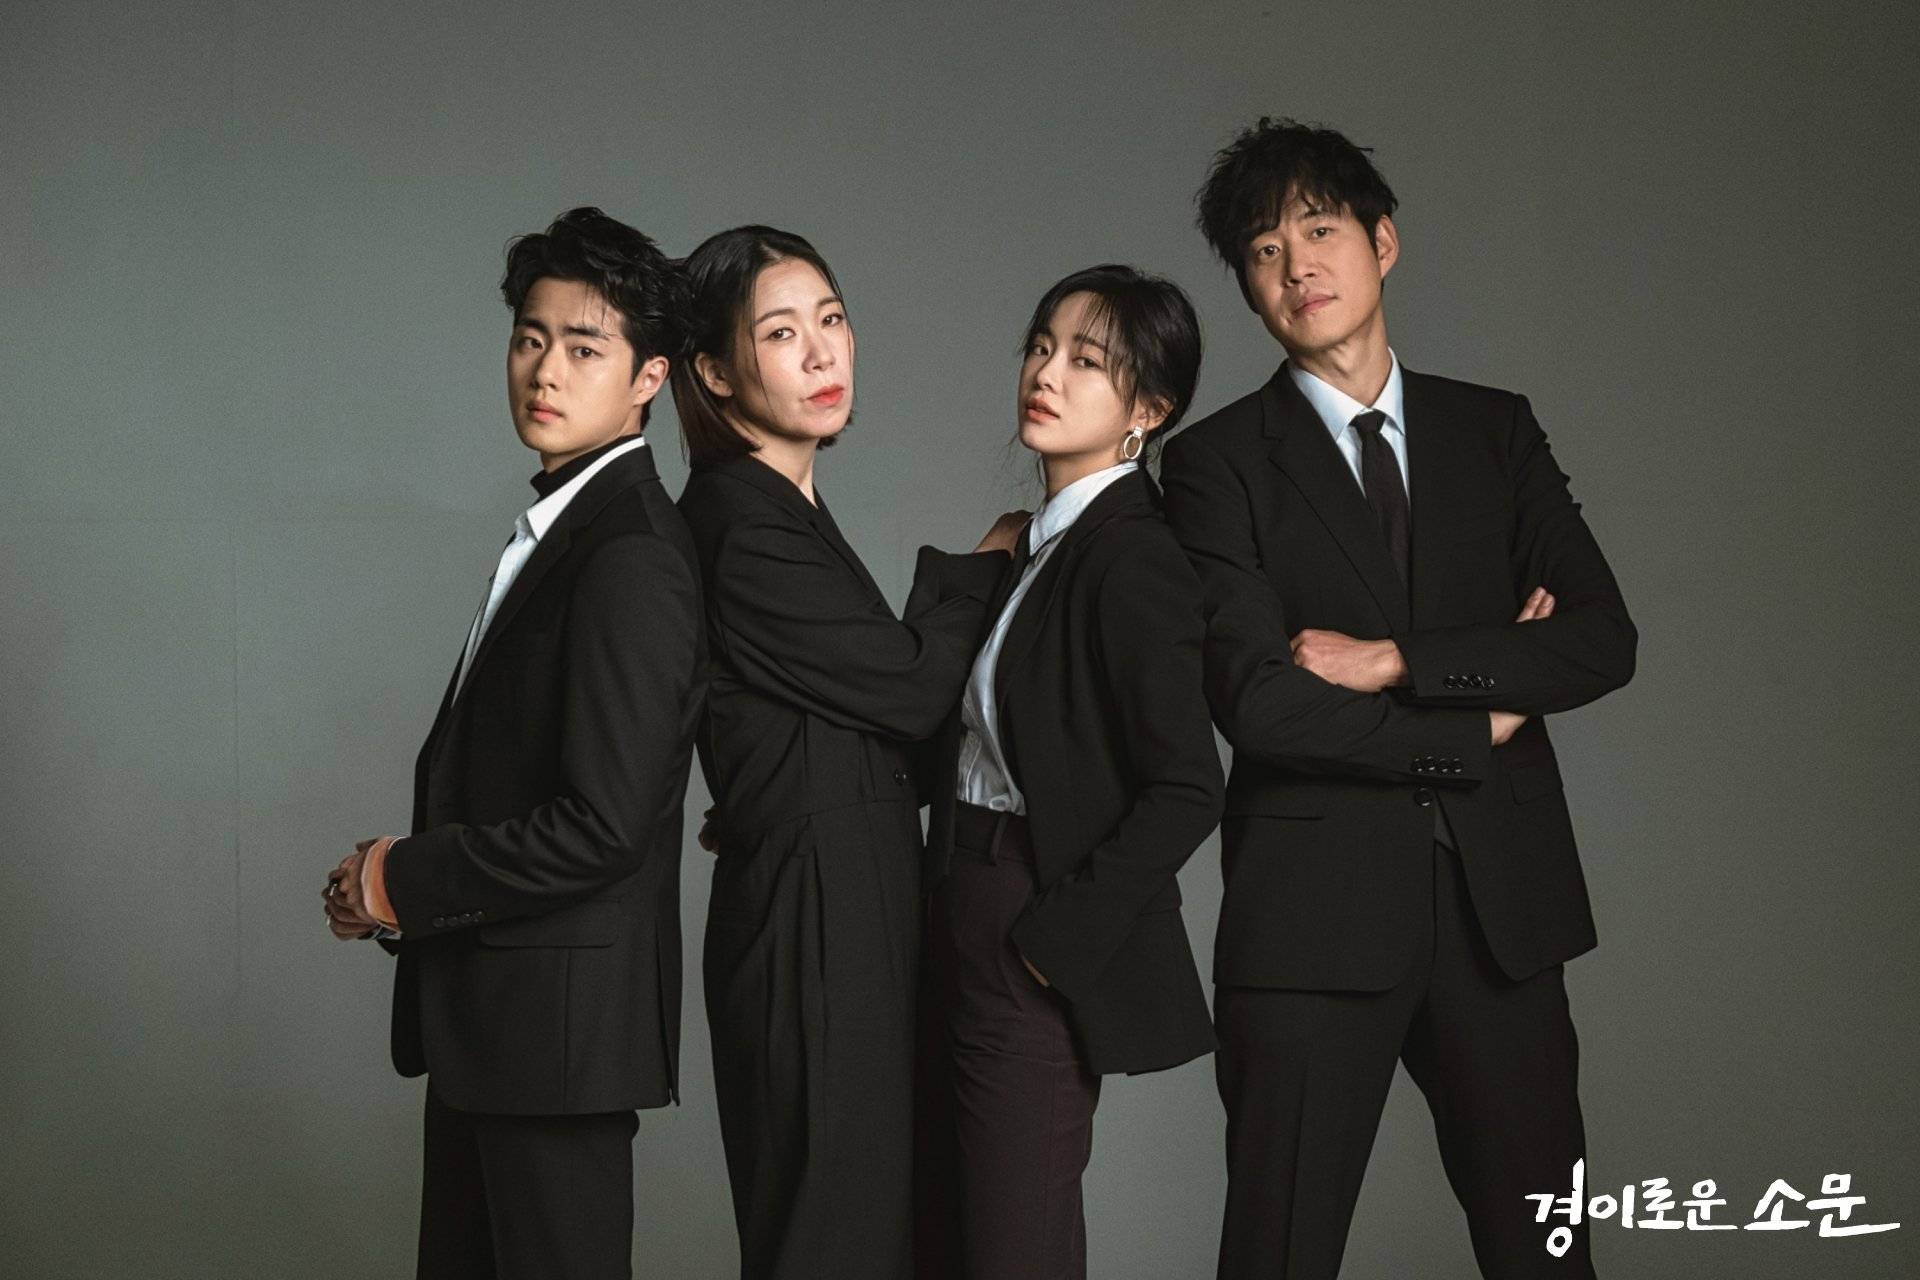 Photos Cast Photoshoot Added For The Korean Drama The Uncanny Counter Hancinema 0417